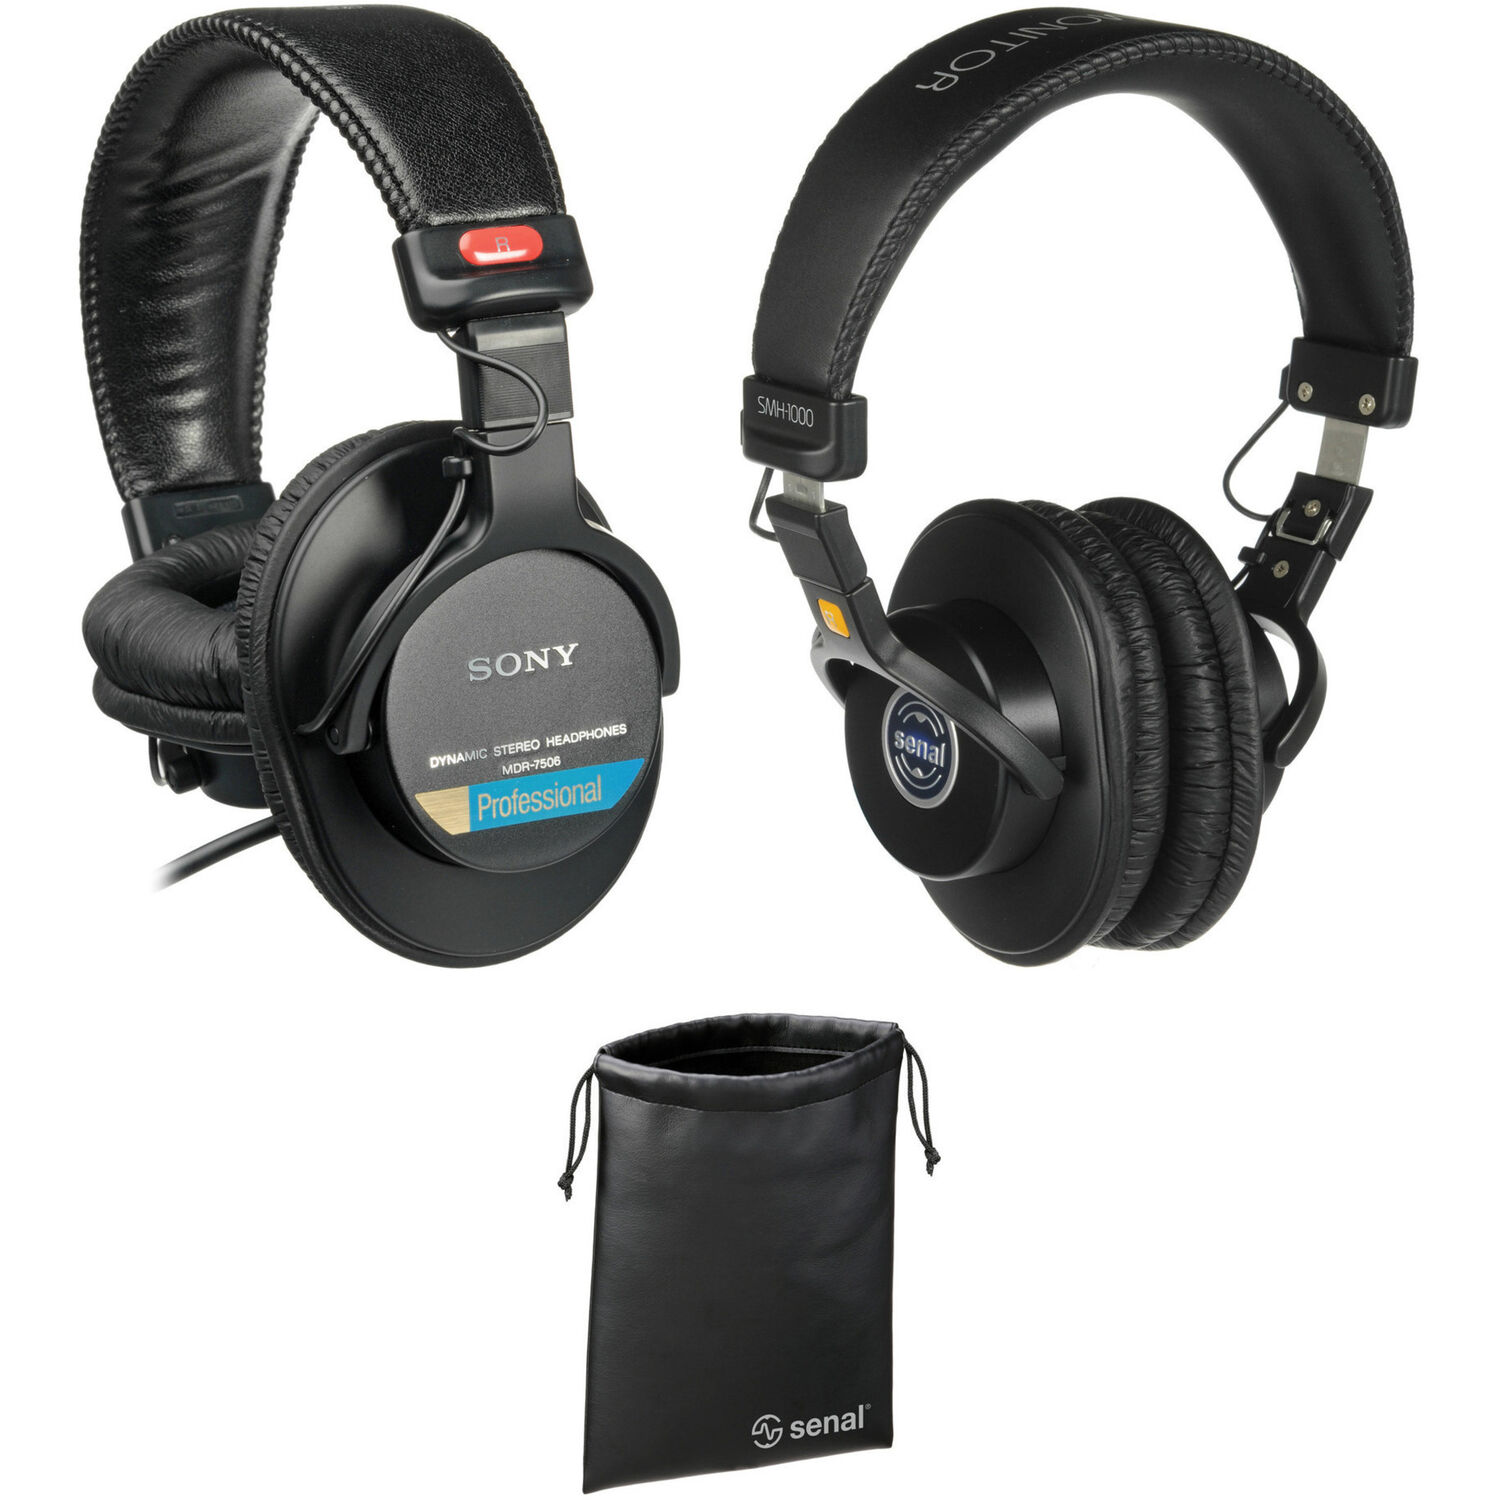 Kit de Auriculares Sony Mdr 7506 y Senal Smh 1000